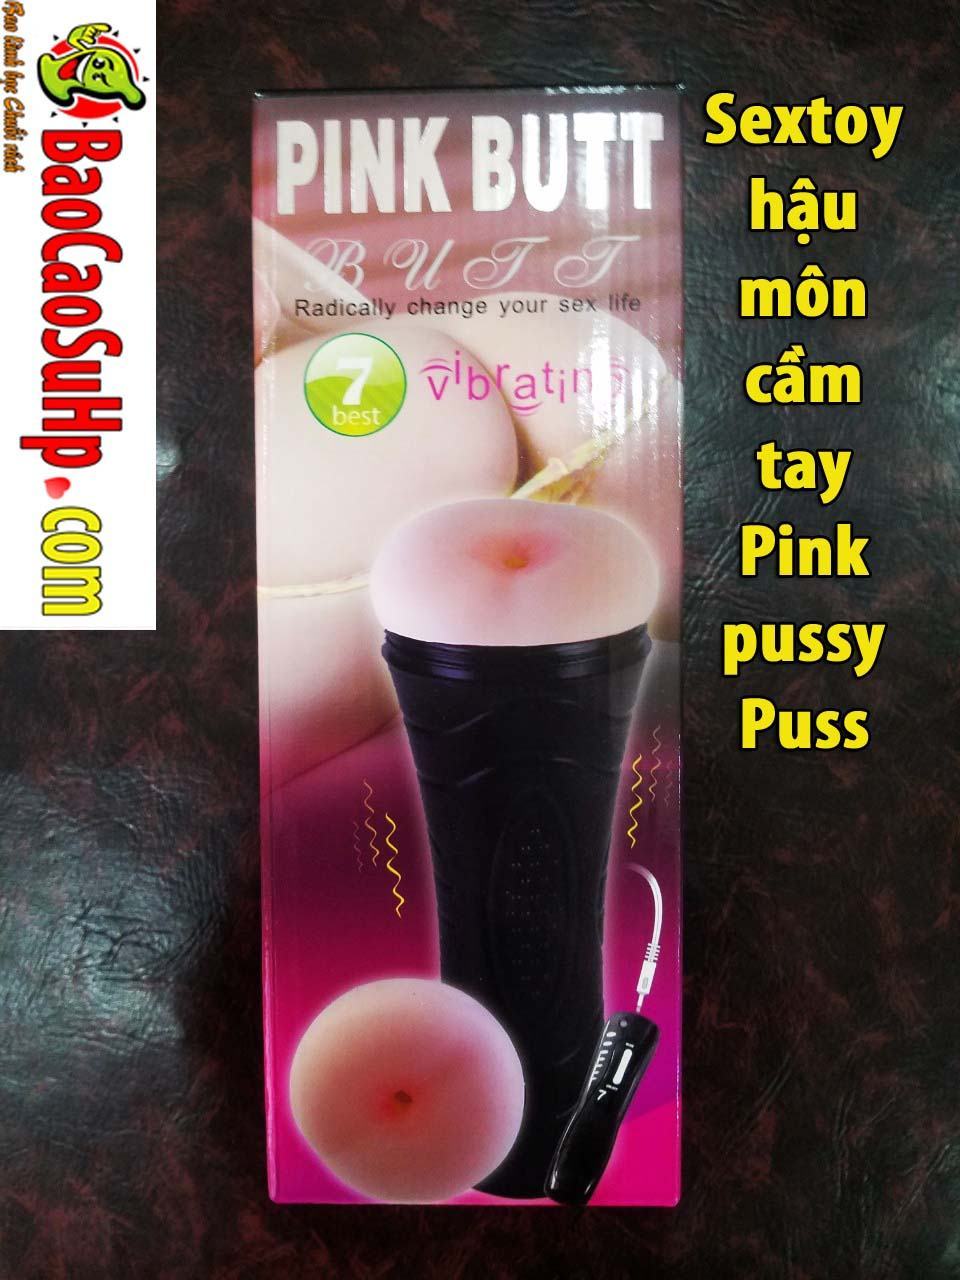 20191211200837 6145258 sextoyhau mon cam tay pink pussy puss - Sextoy hậu môn cầm tay Pink pussy Puss